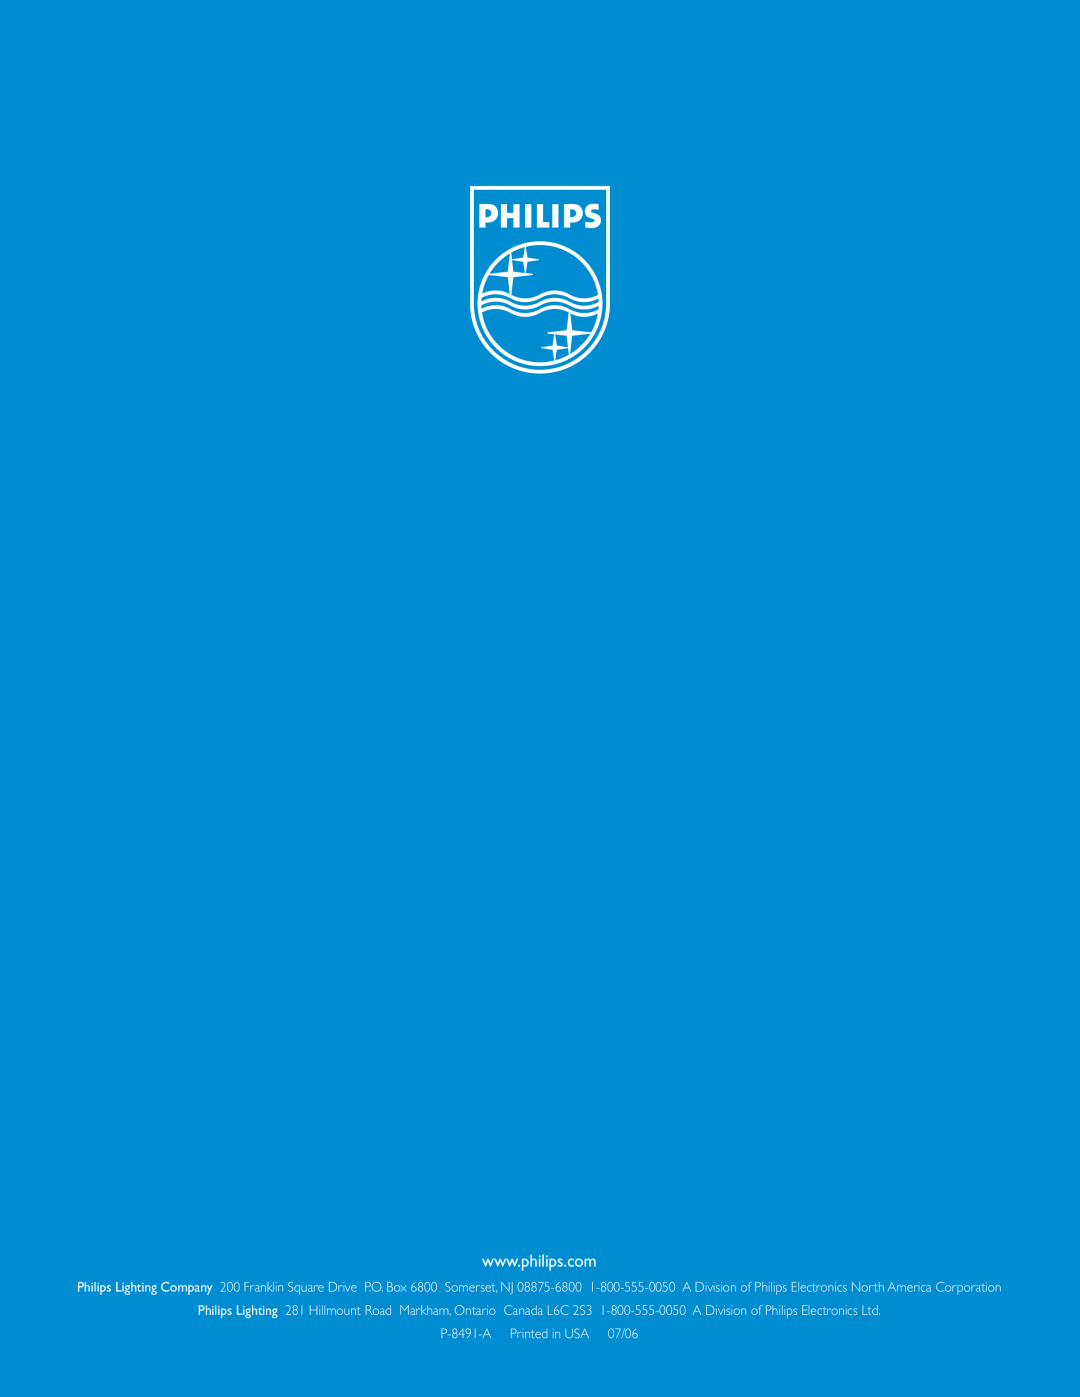 Philips Long Life Light Bulb manual P-8491-A, 07/06 